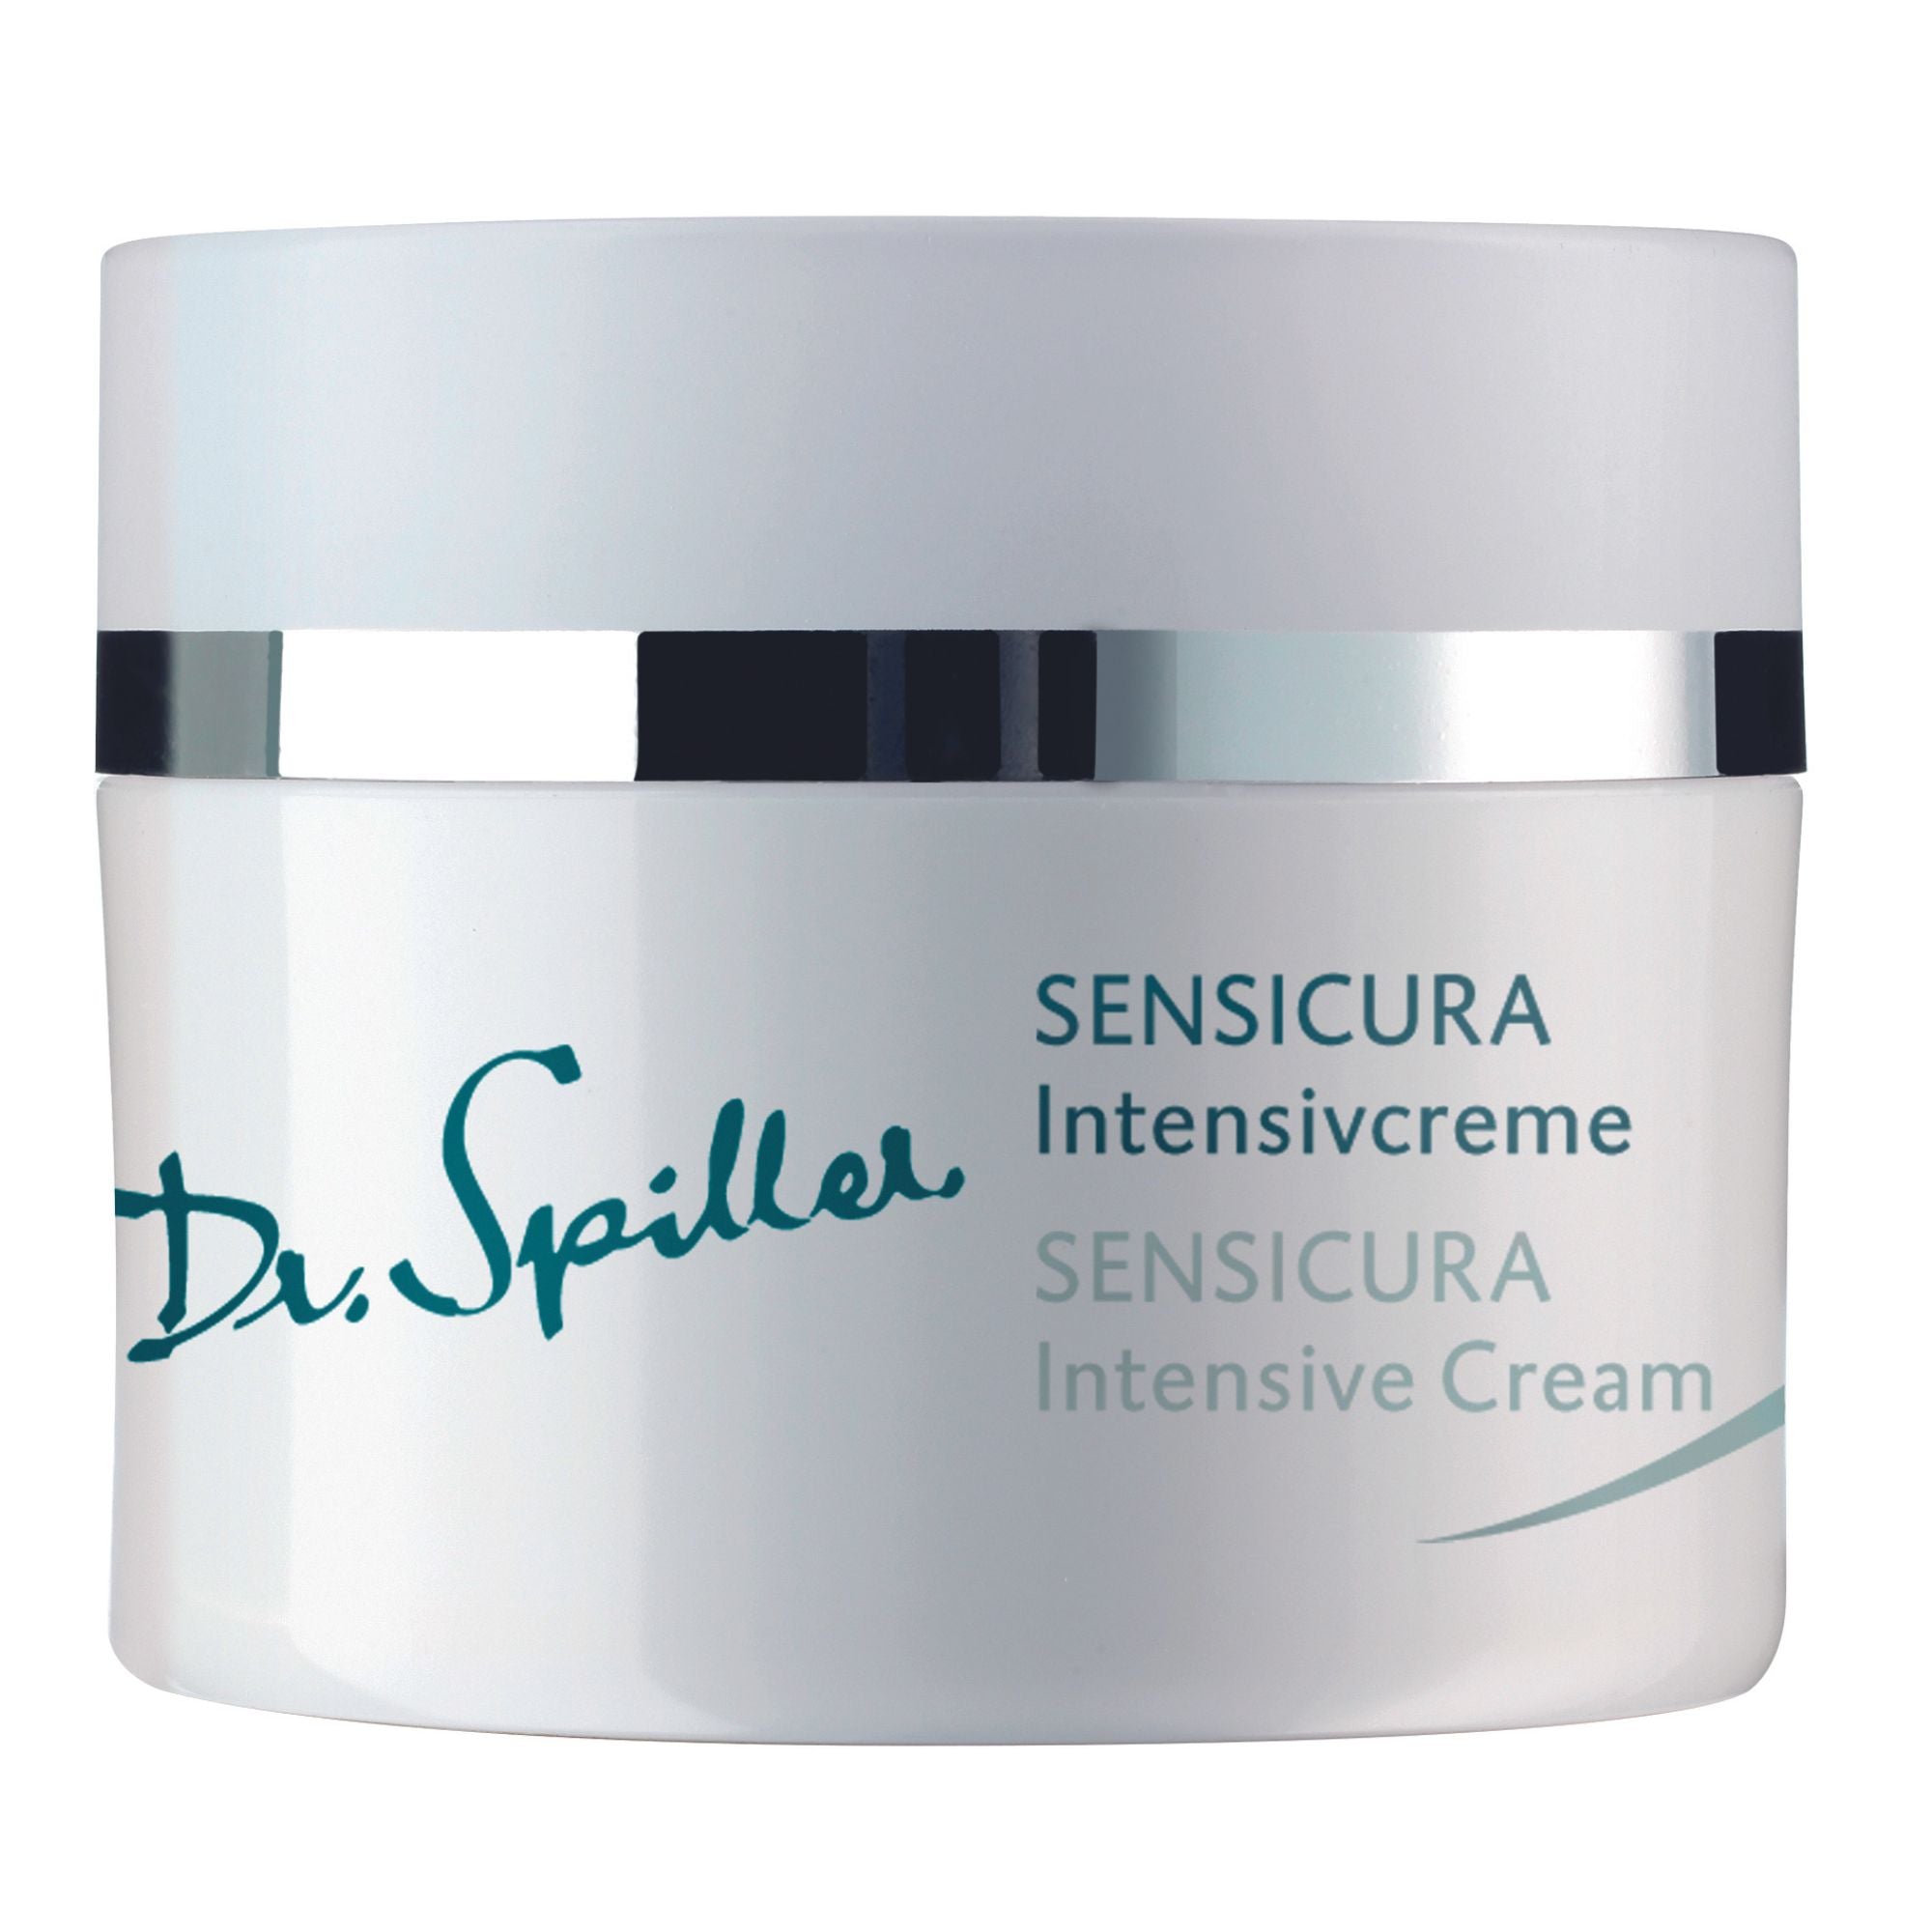 Dr. Spiller SENSICURA Intensivcreme (50ml)